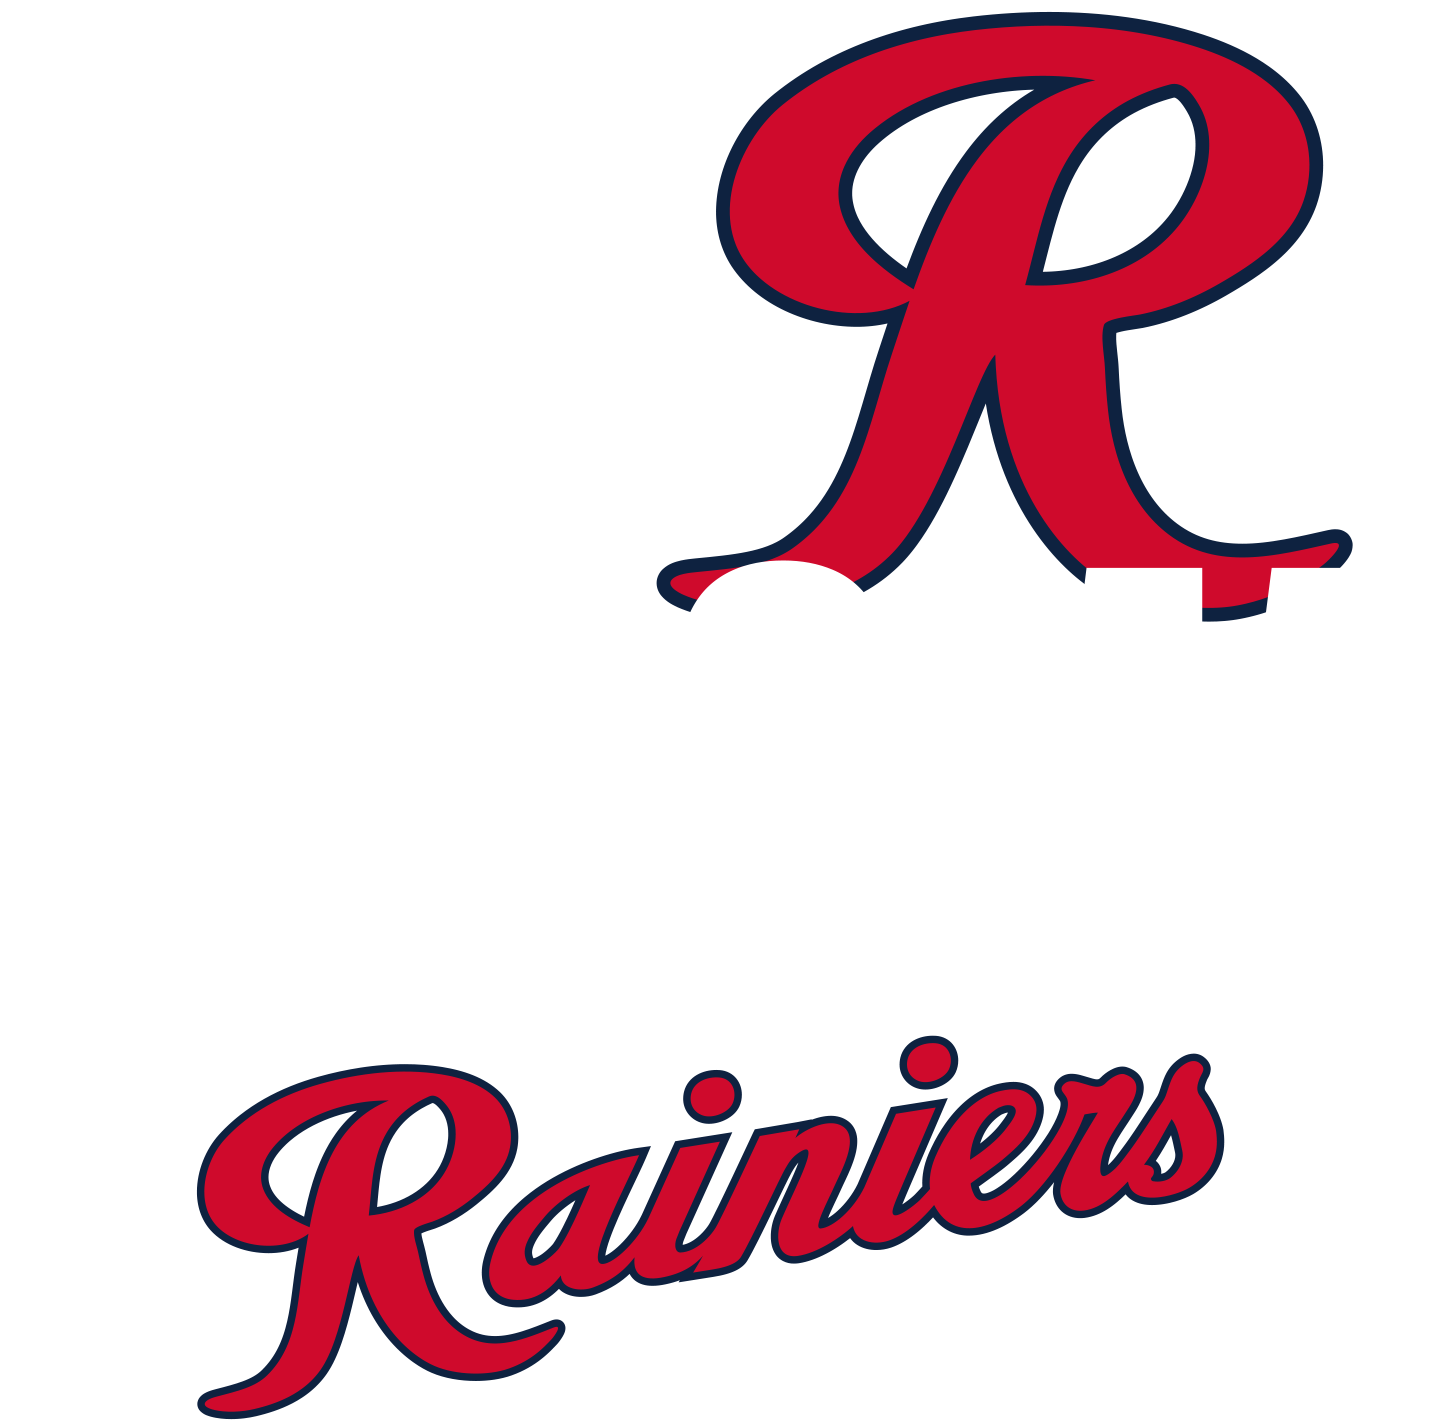 R скопировать. Tacoma logo. Toys r us logo. R logo PNG. Passion r logo PNG.